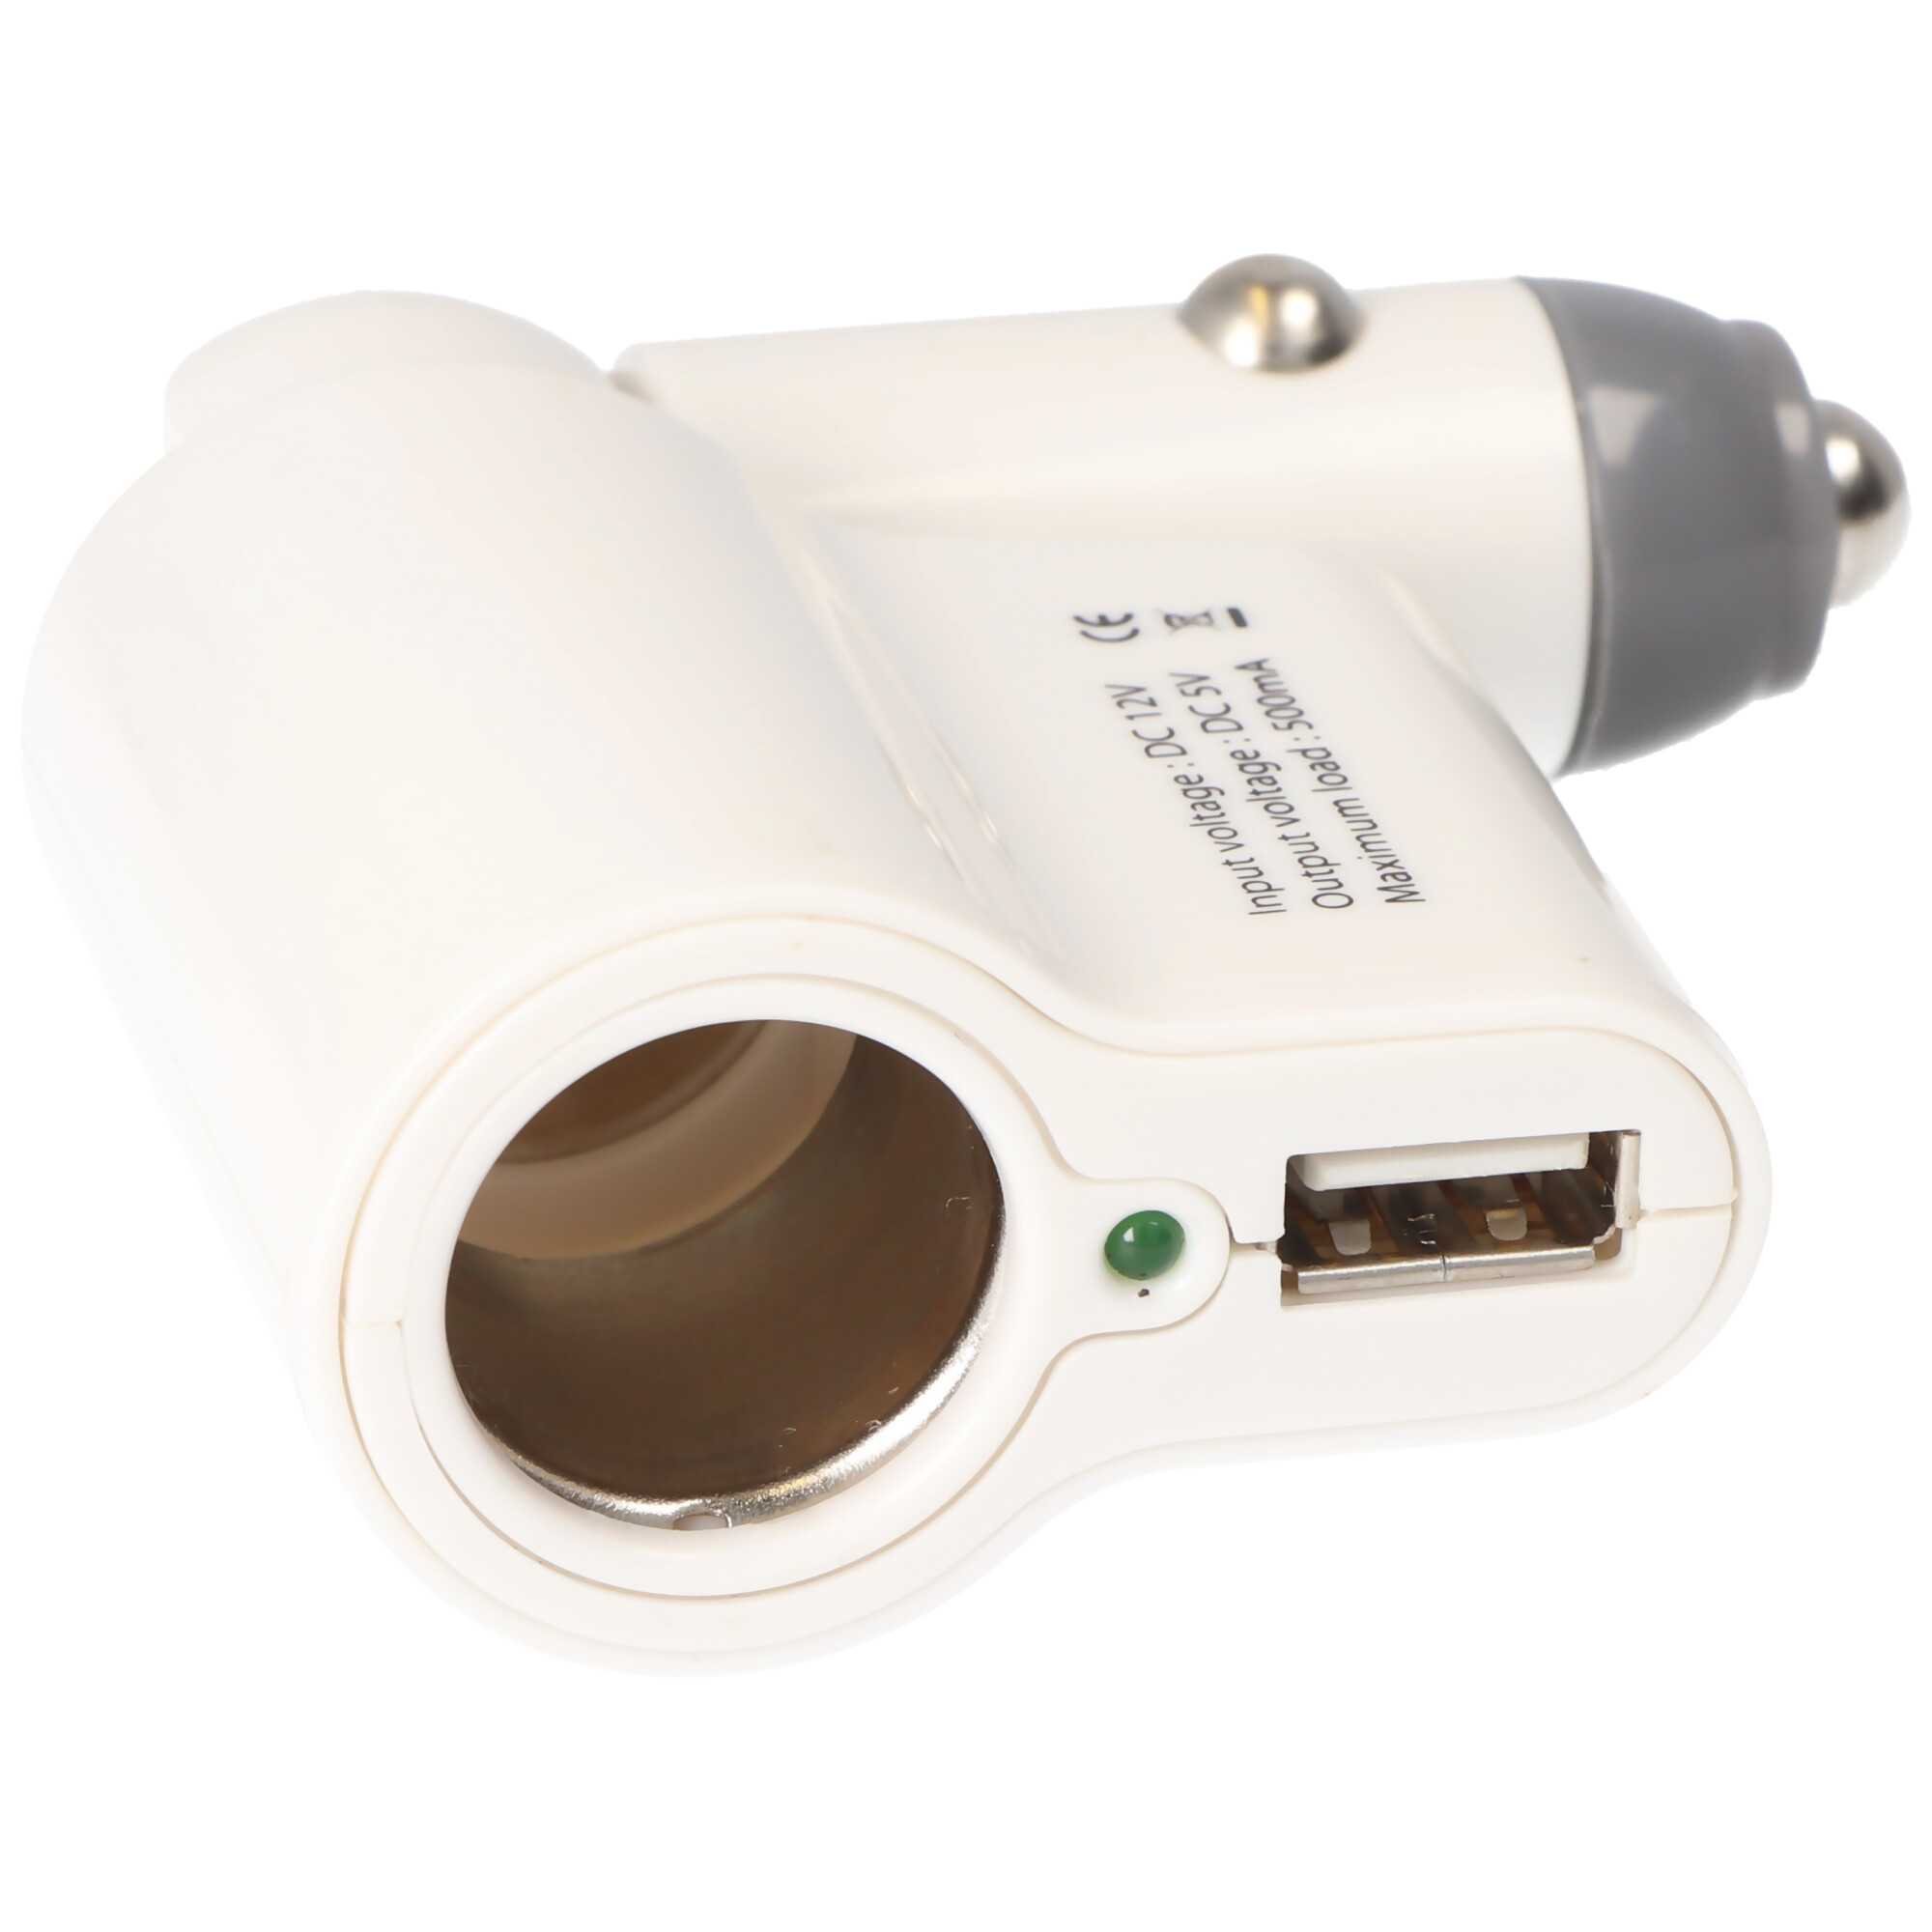 Kfz-Ladegerät mit Buchse und USB, Weiß, Autoladegerät BH-13007, input DC 12V, output 5V, 500mA